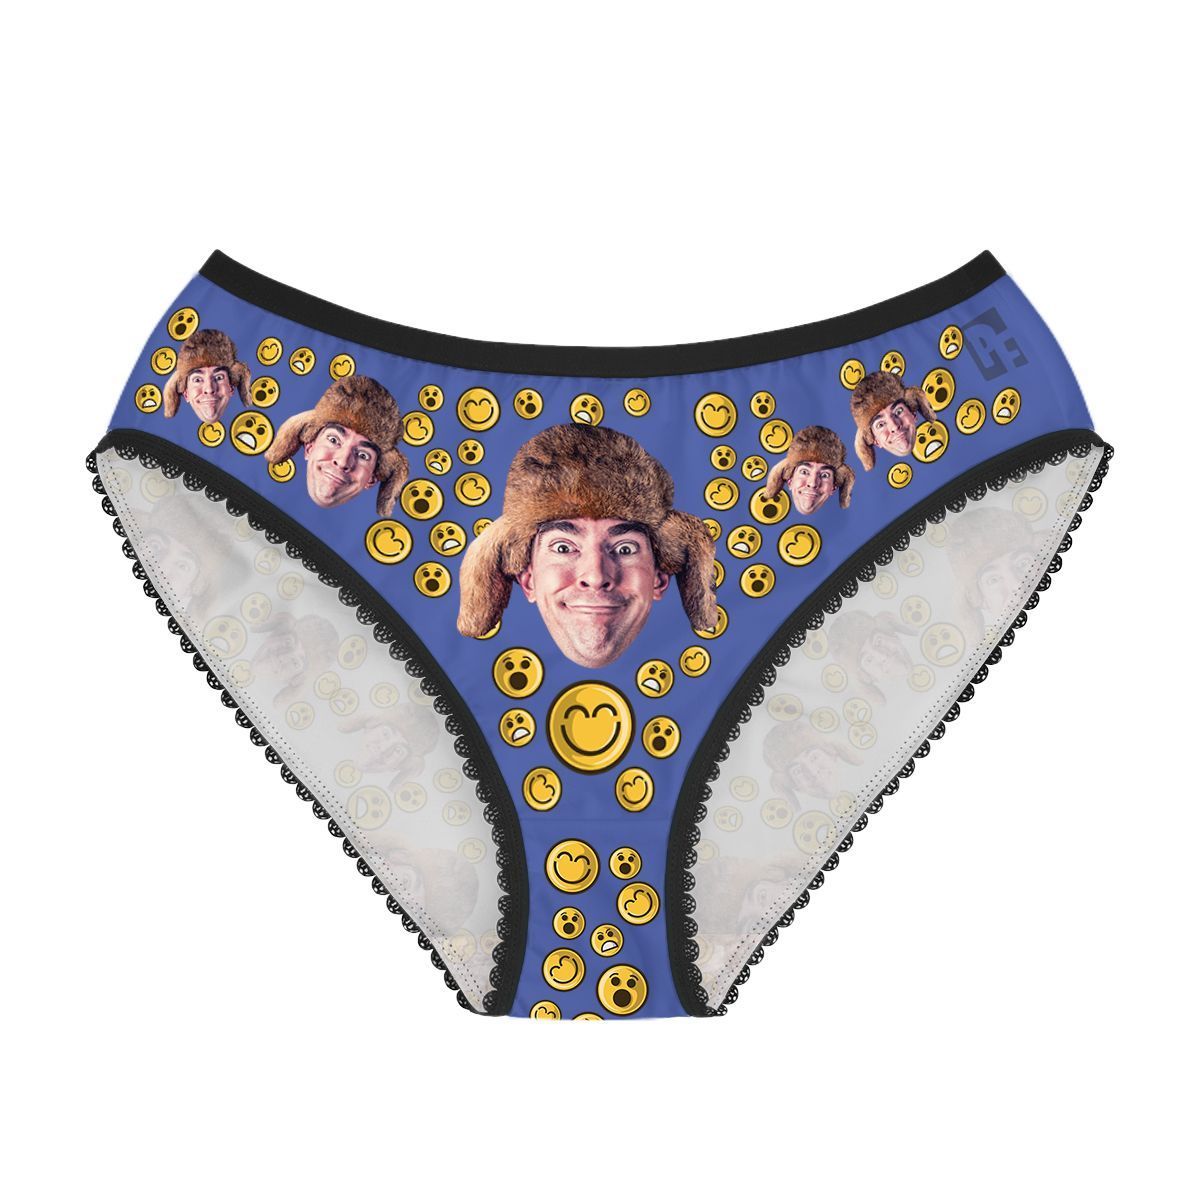 Darkblue Smiles women's underwear briefs personalized with photo printed on them